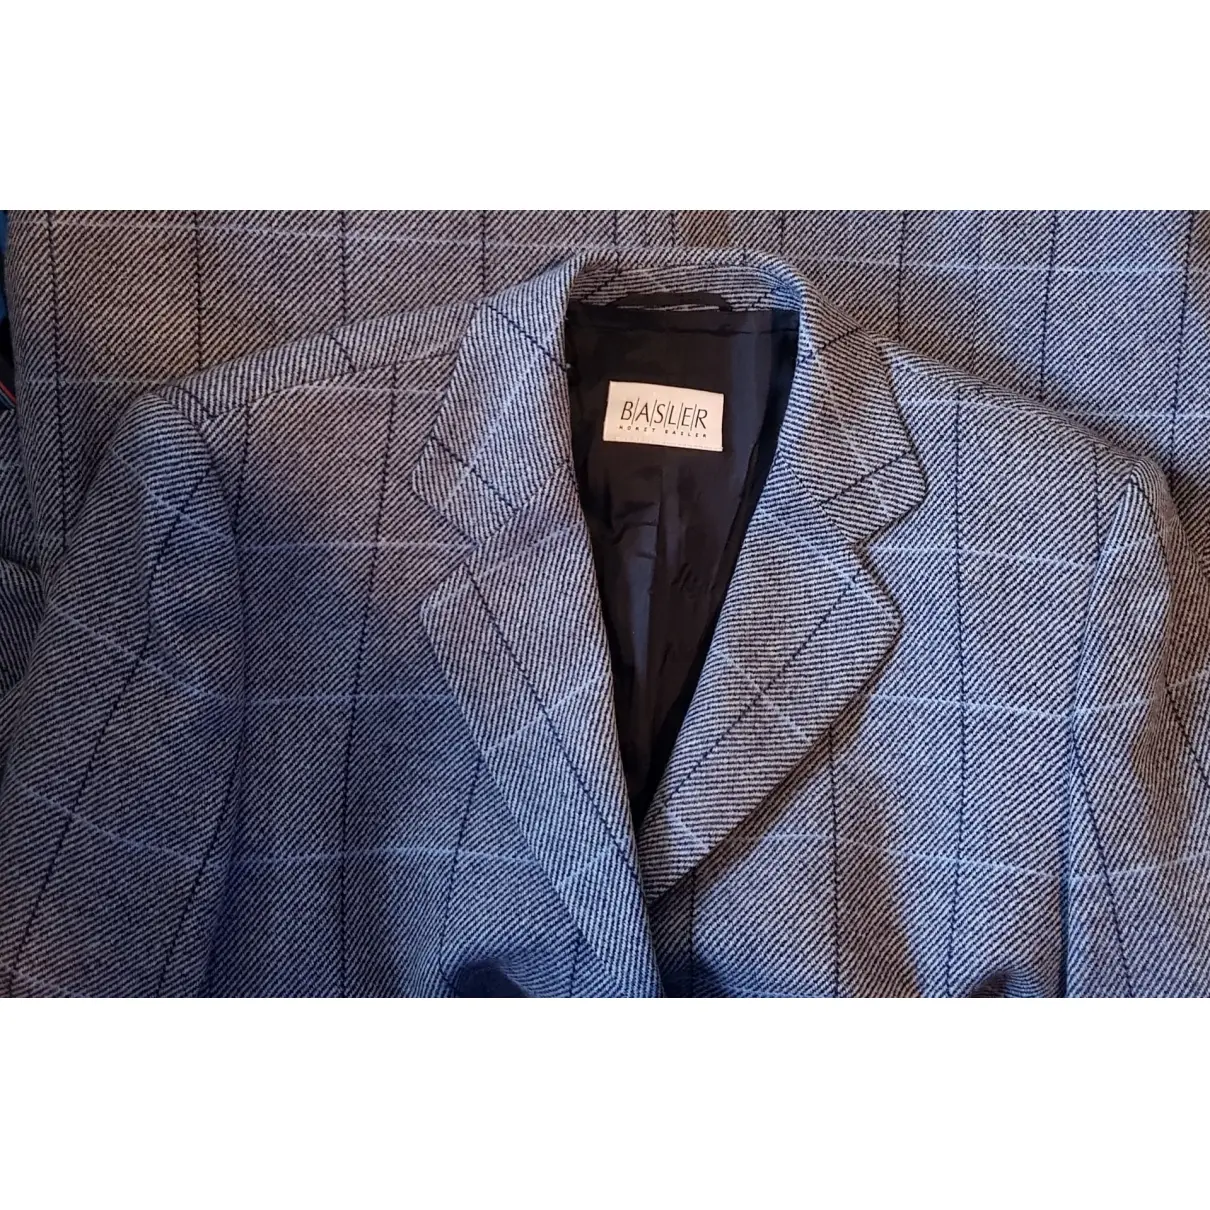 Buy Basler Wool suit jacket online